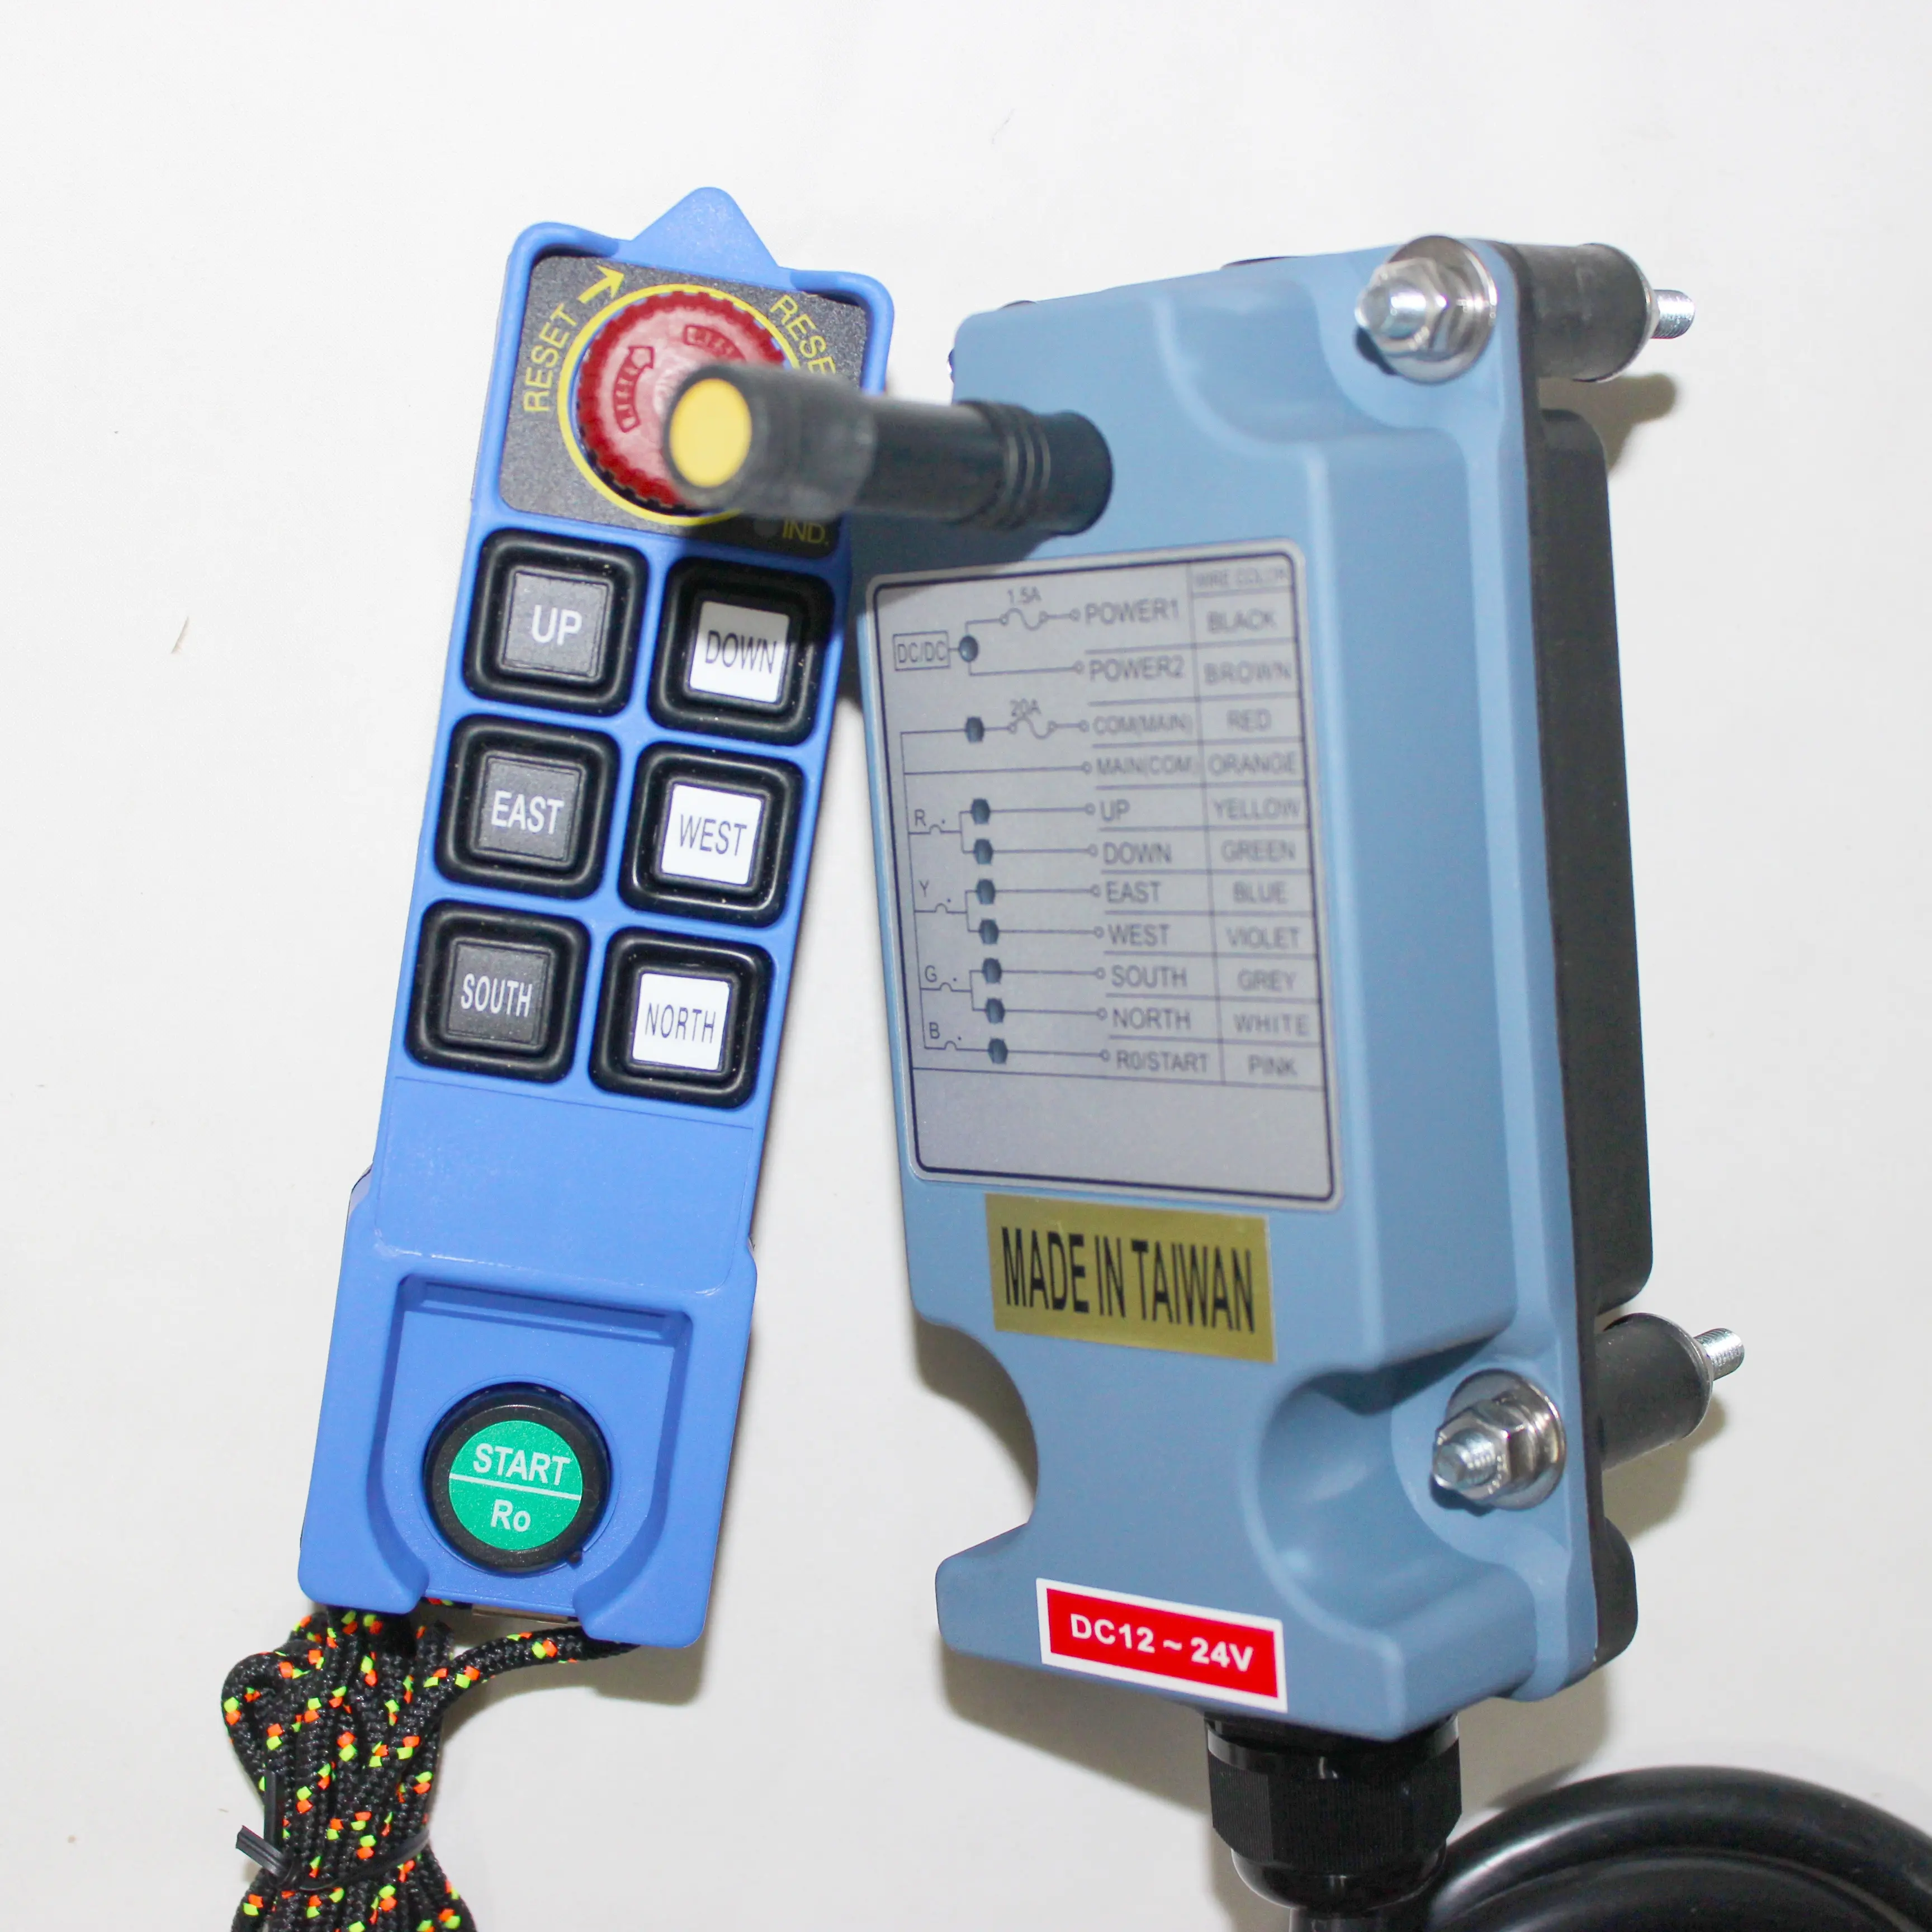 SAGA series SAGA1-L8B industrial wireless crane remote controller high quality remote control